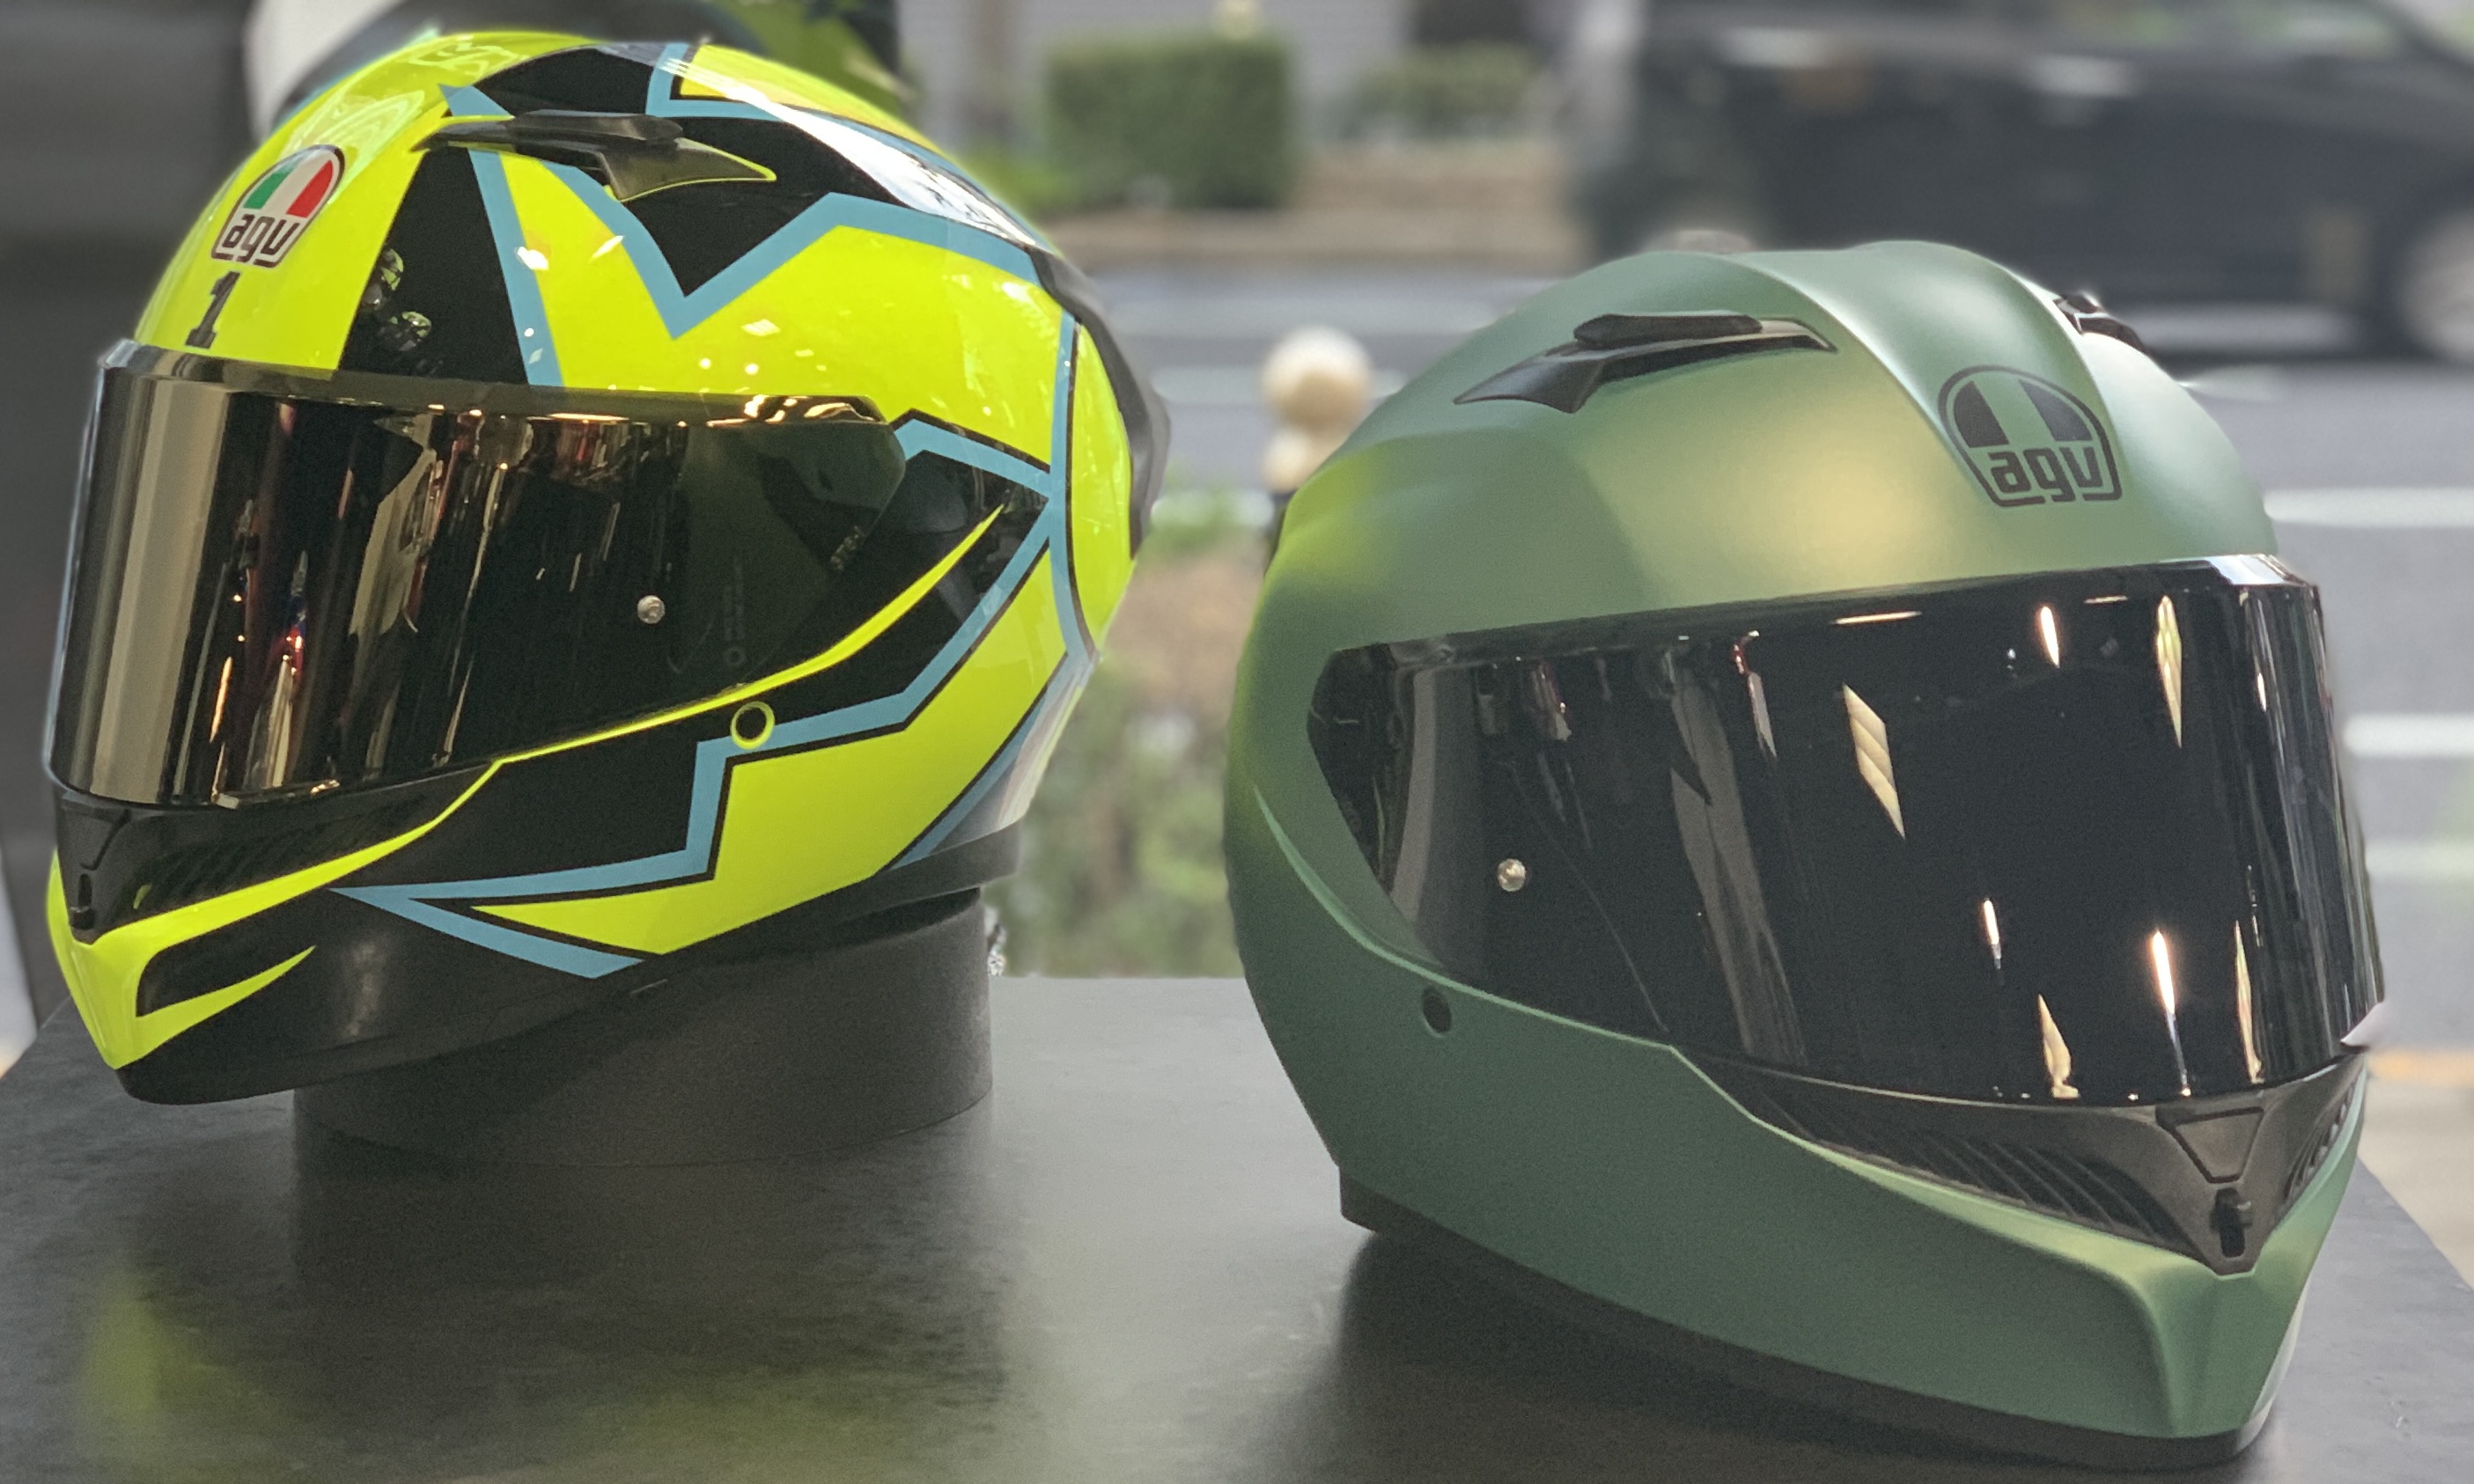 AGVを代表するフルフェイスストリートヘルメット [K3] の魅力をあらためてご紹介